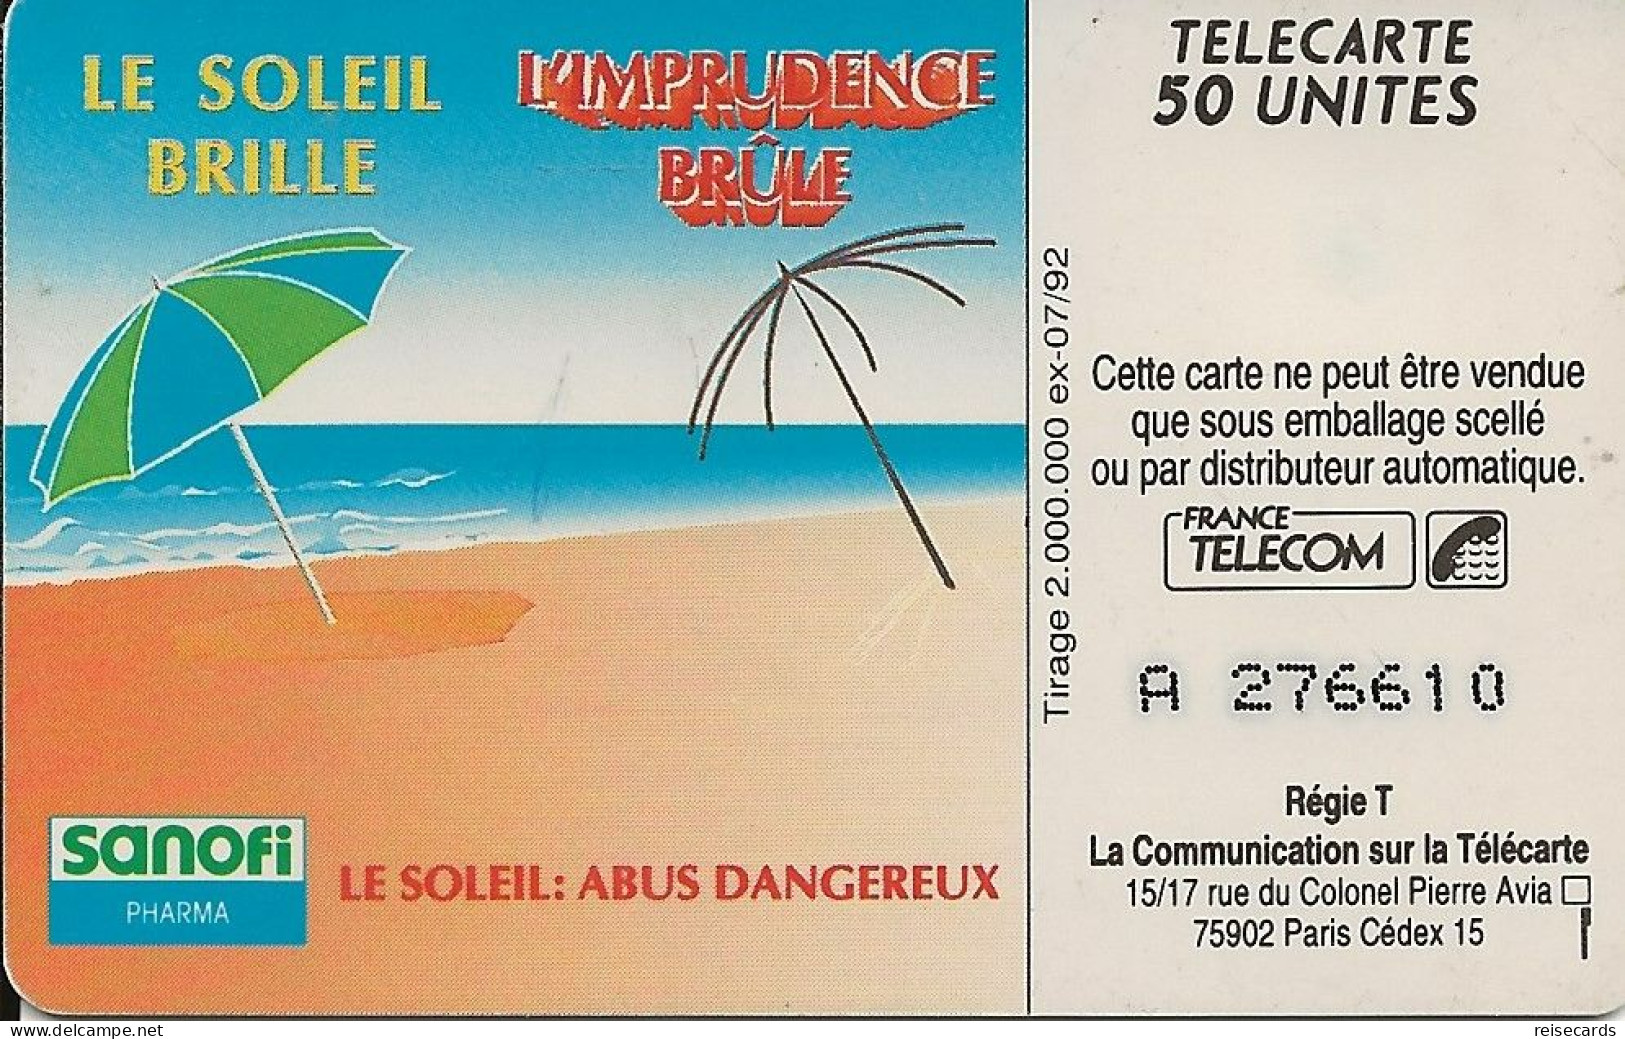 France: France Telecom 07/92 F285A Sanofi - 1992